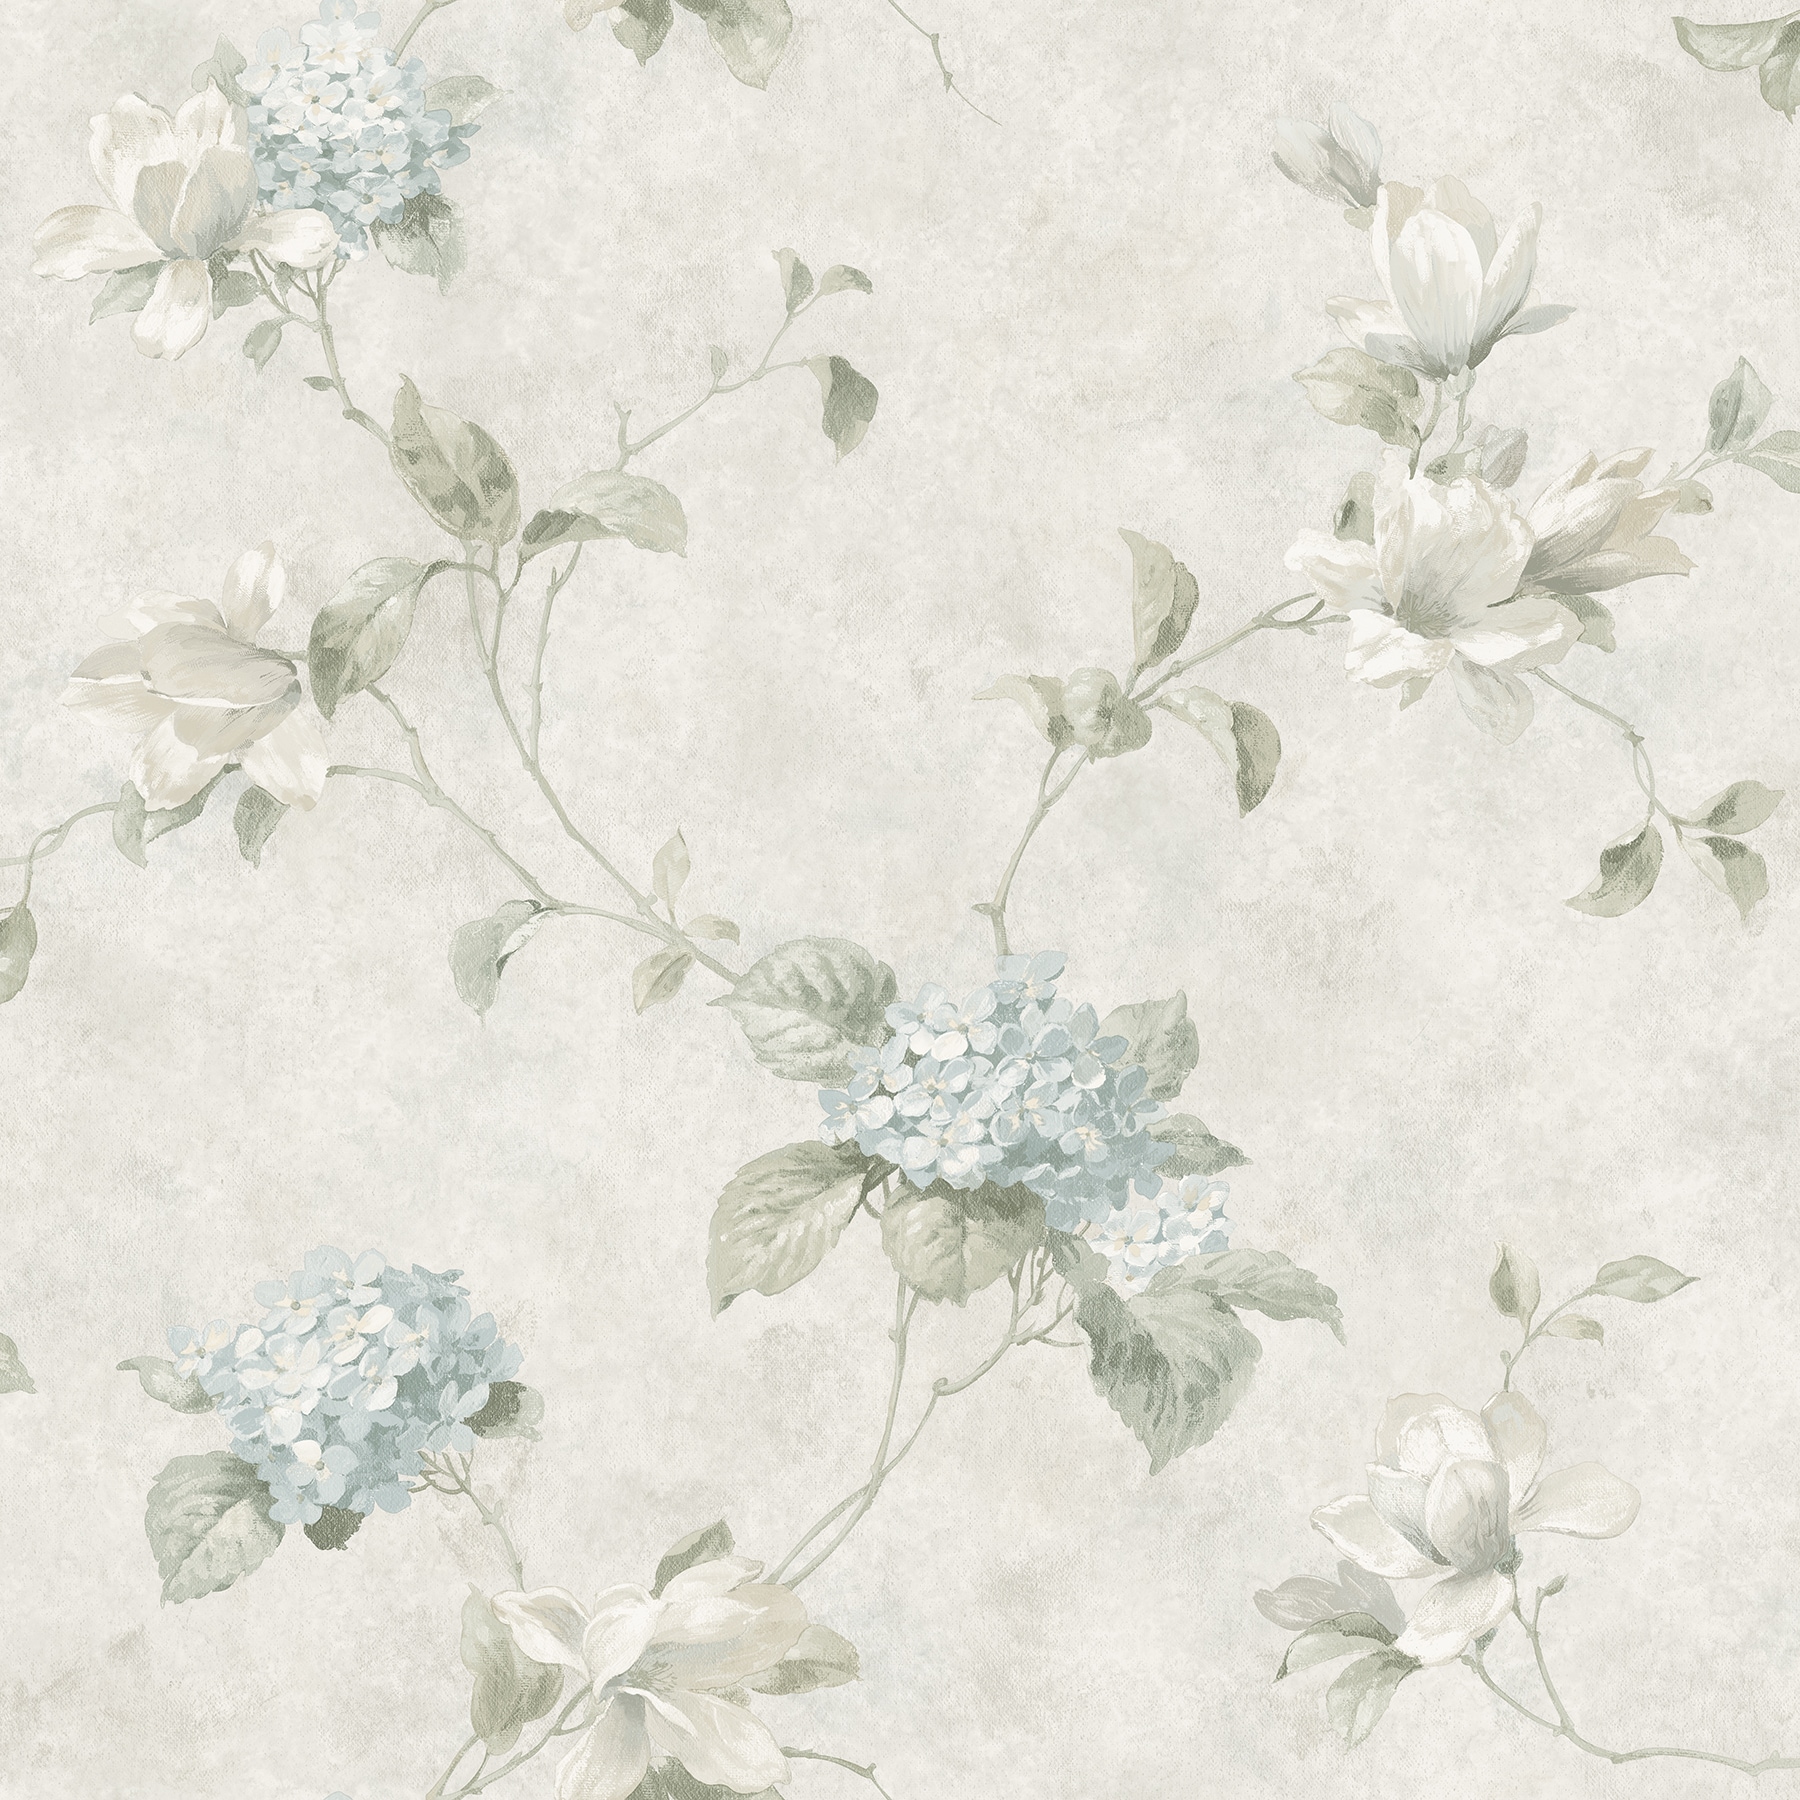 Removable Water-Activated Wallpaper White Floral Gadren Botanical Spring Flower 